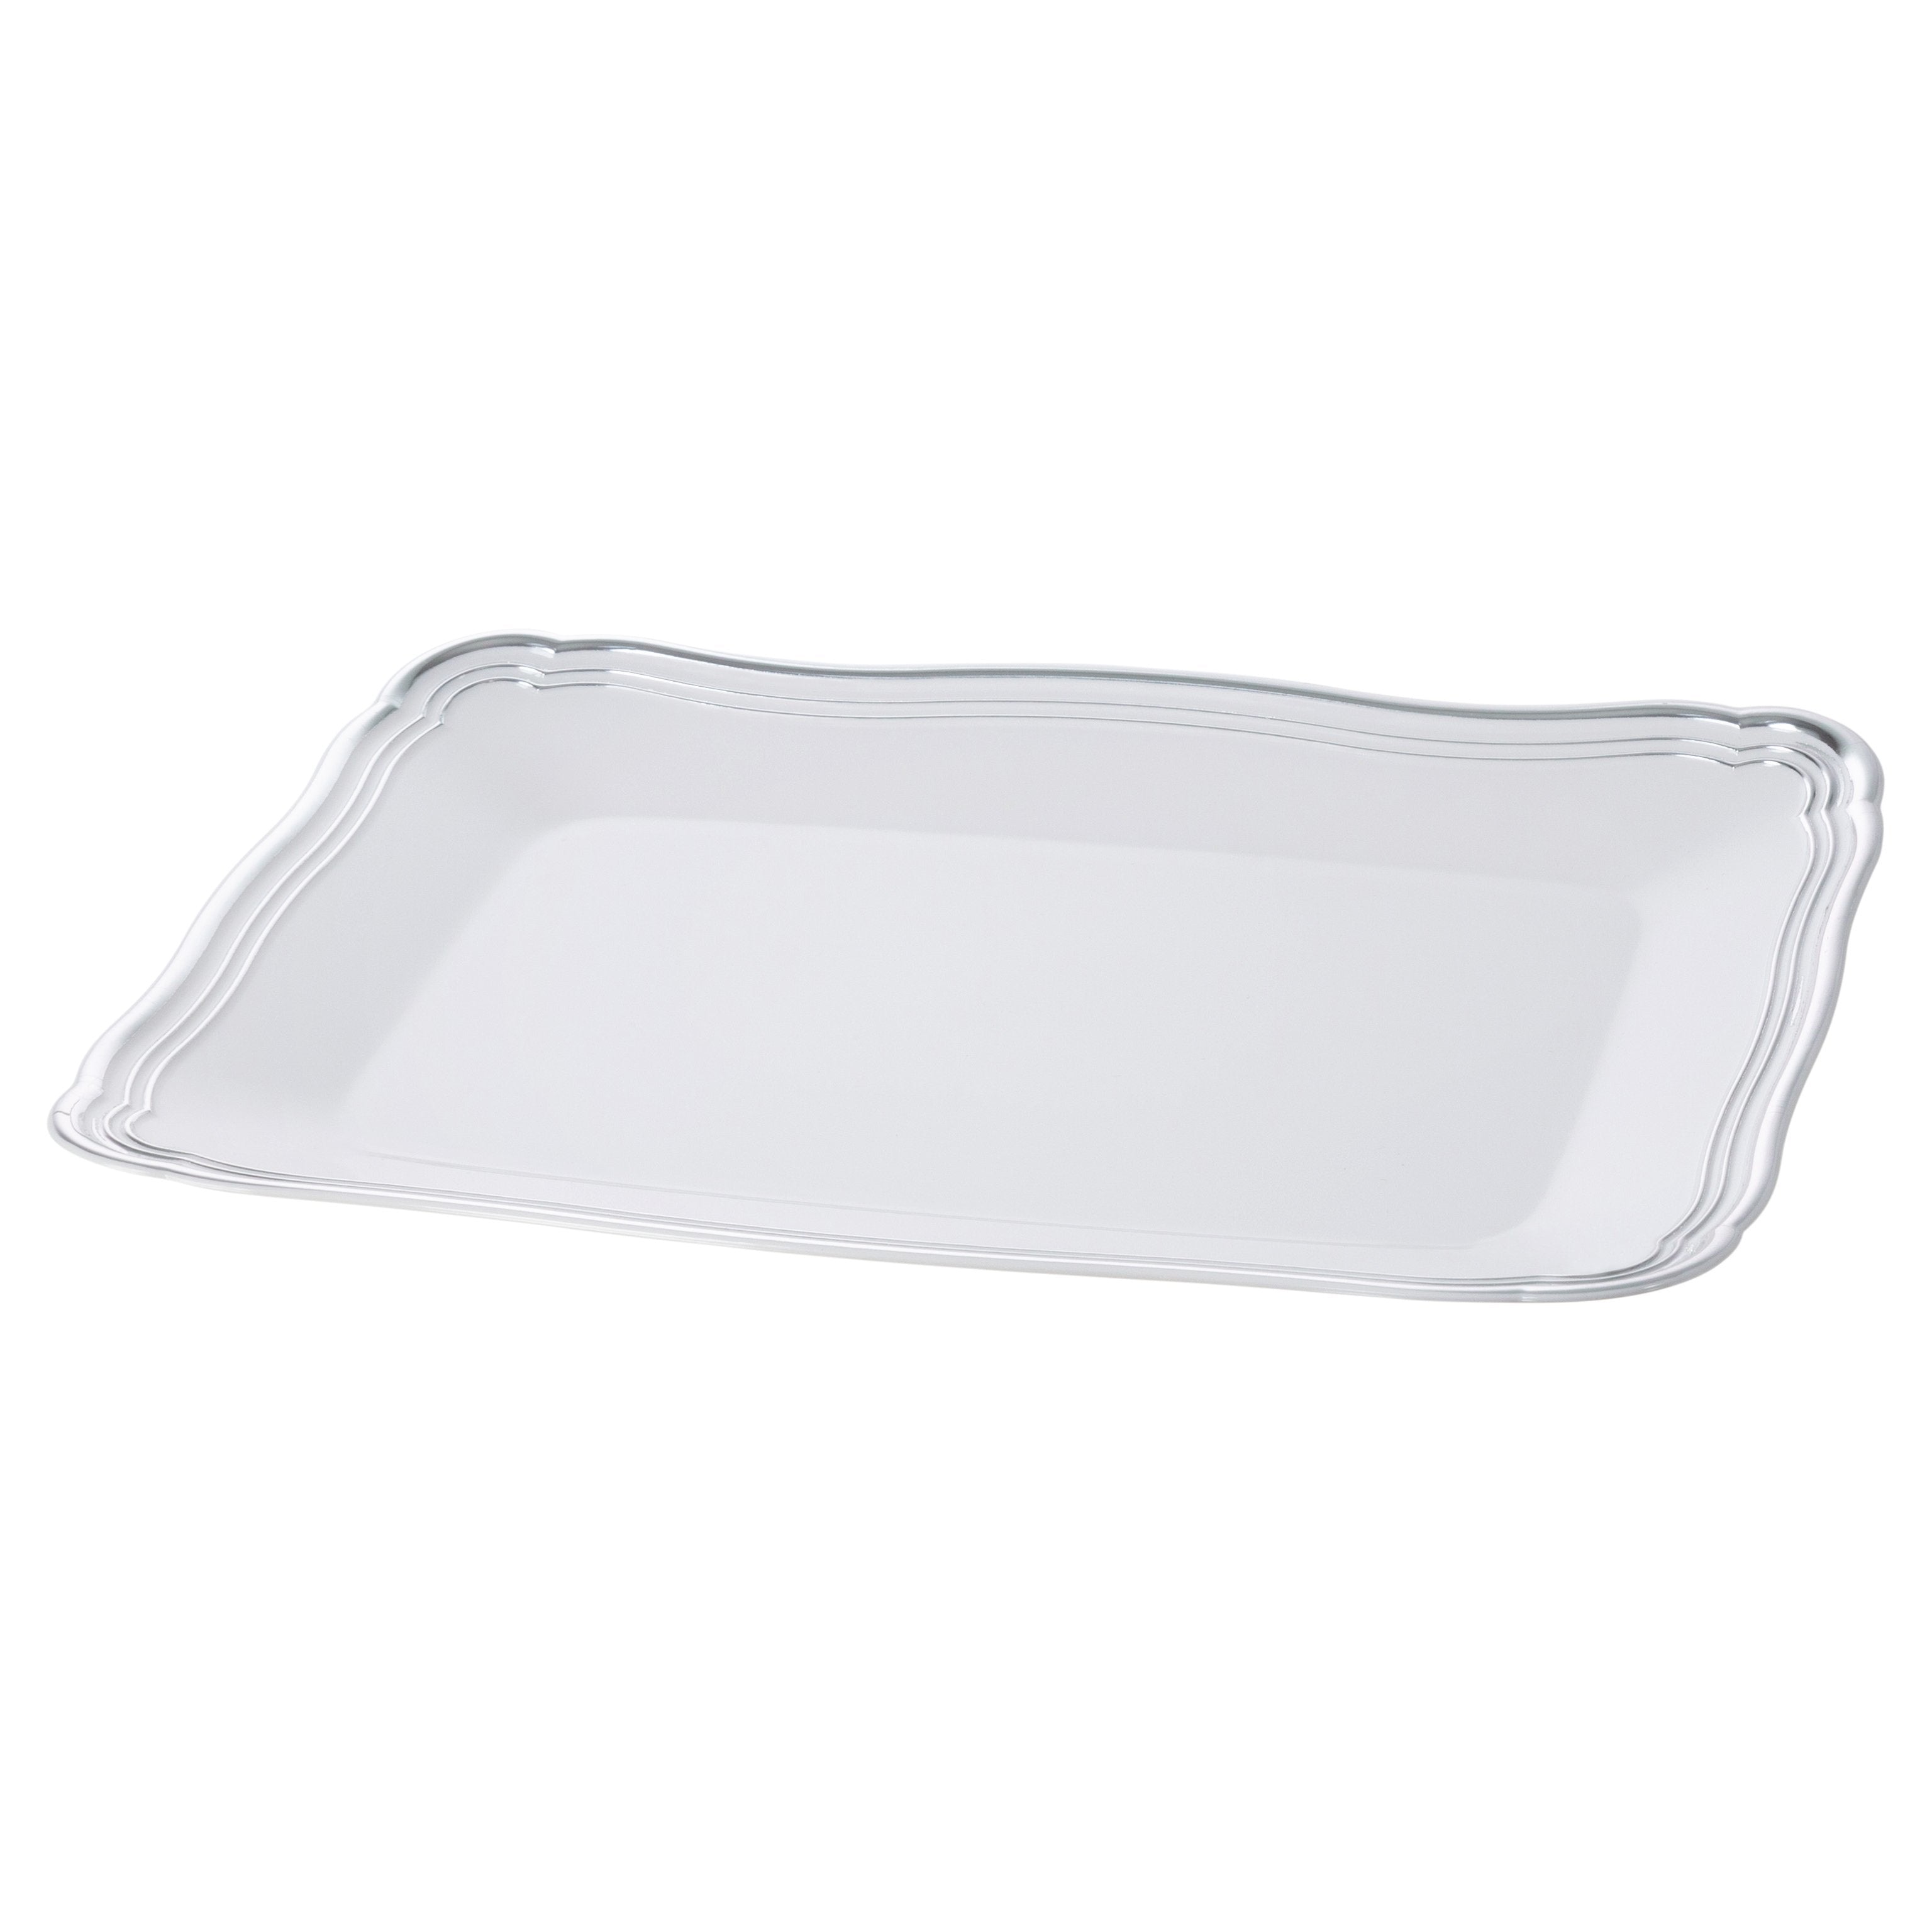 Plastic Tray - Black Rectangular Serving Tray  Plastic serving trays,  Black serving trays, Plastic trays